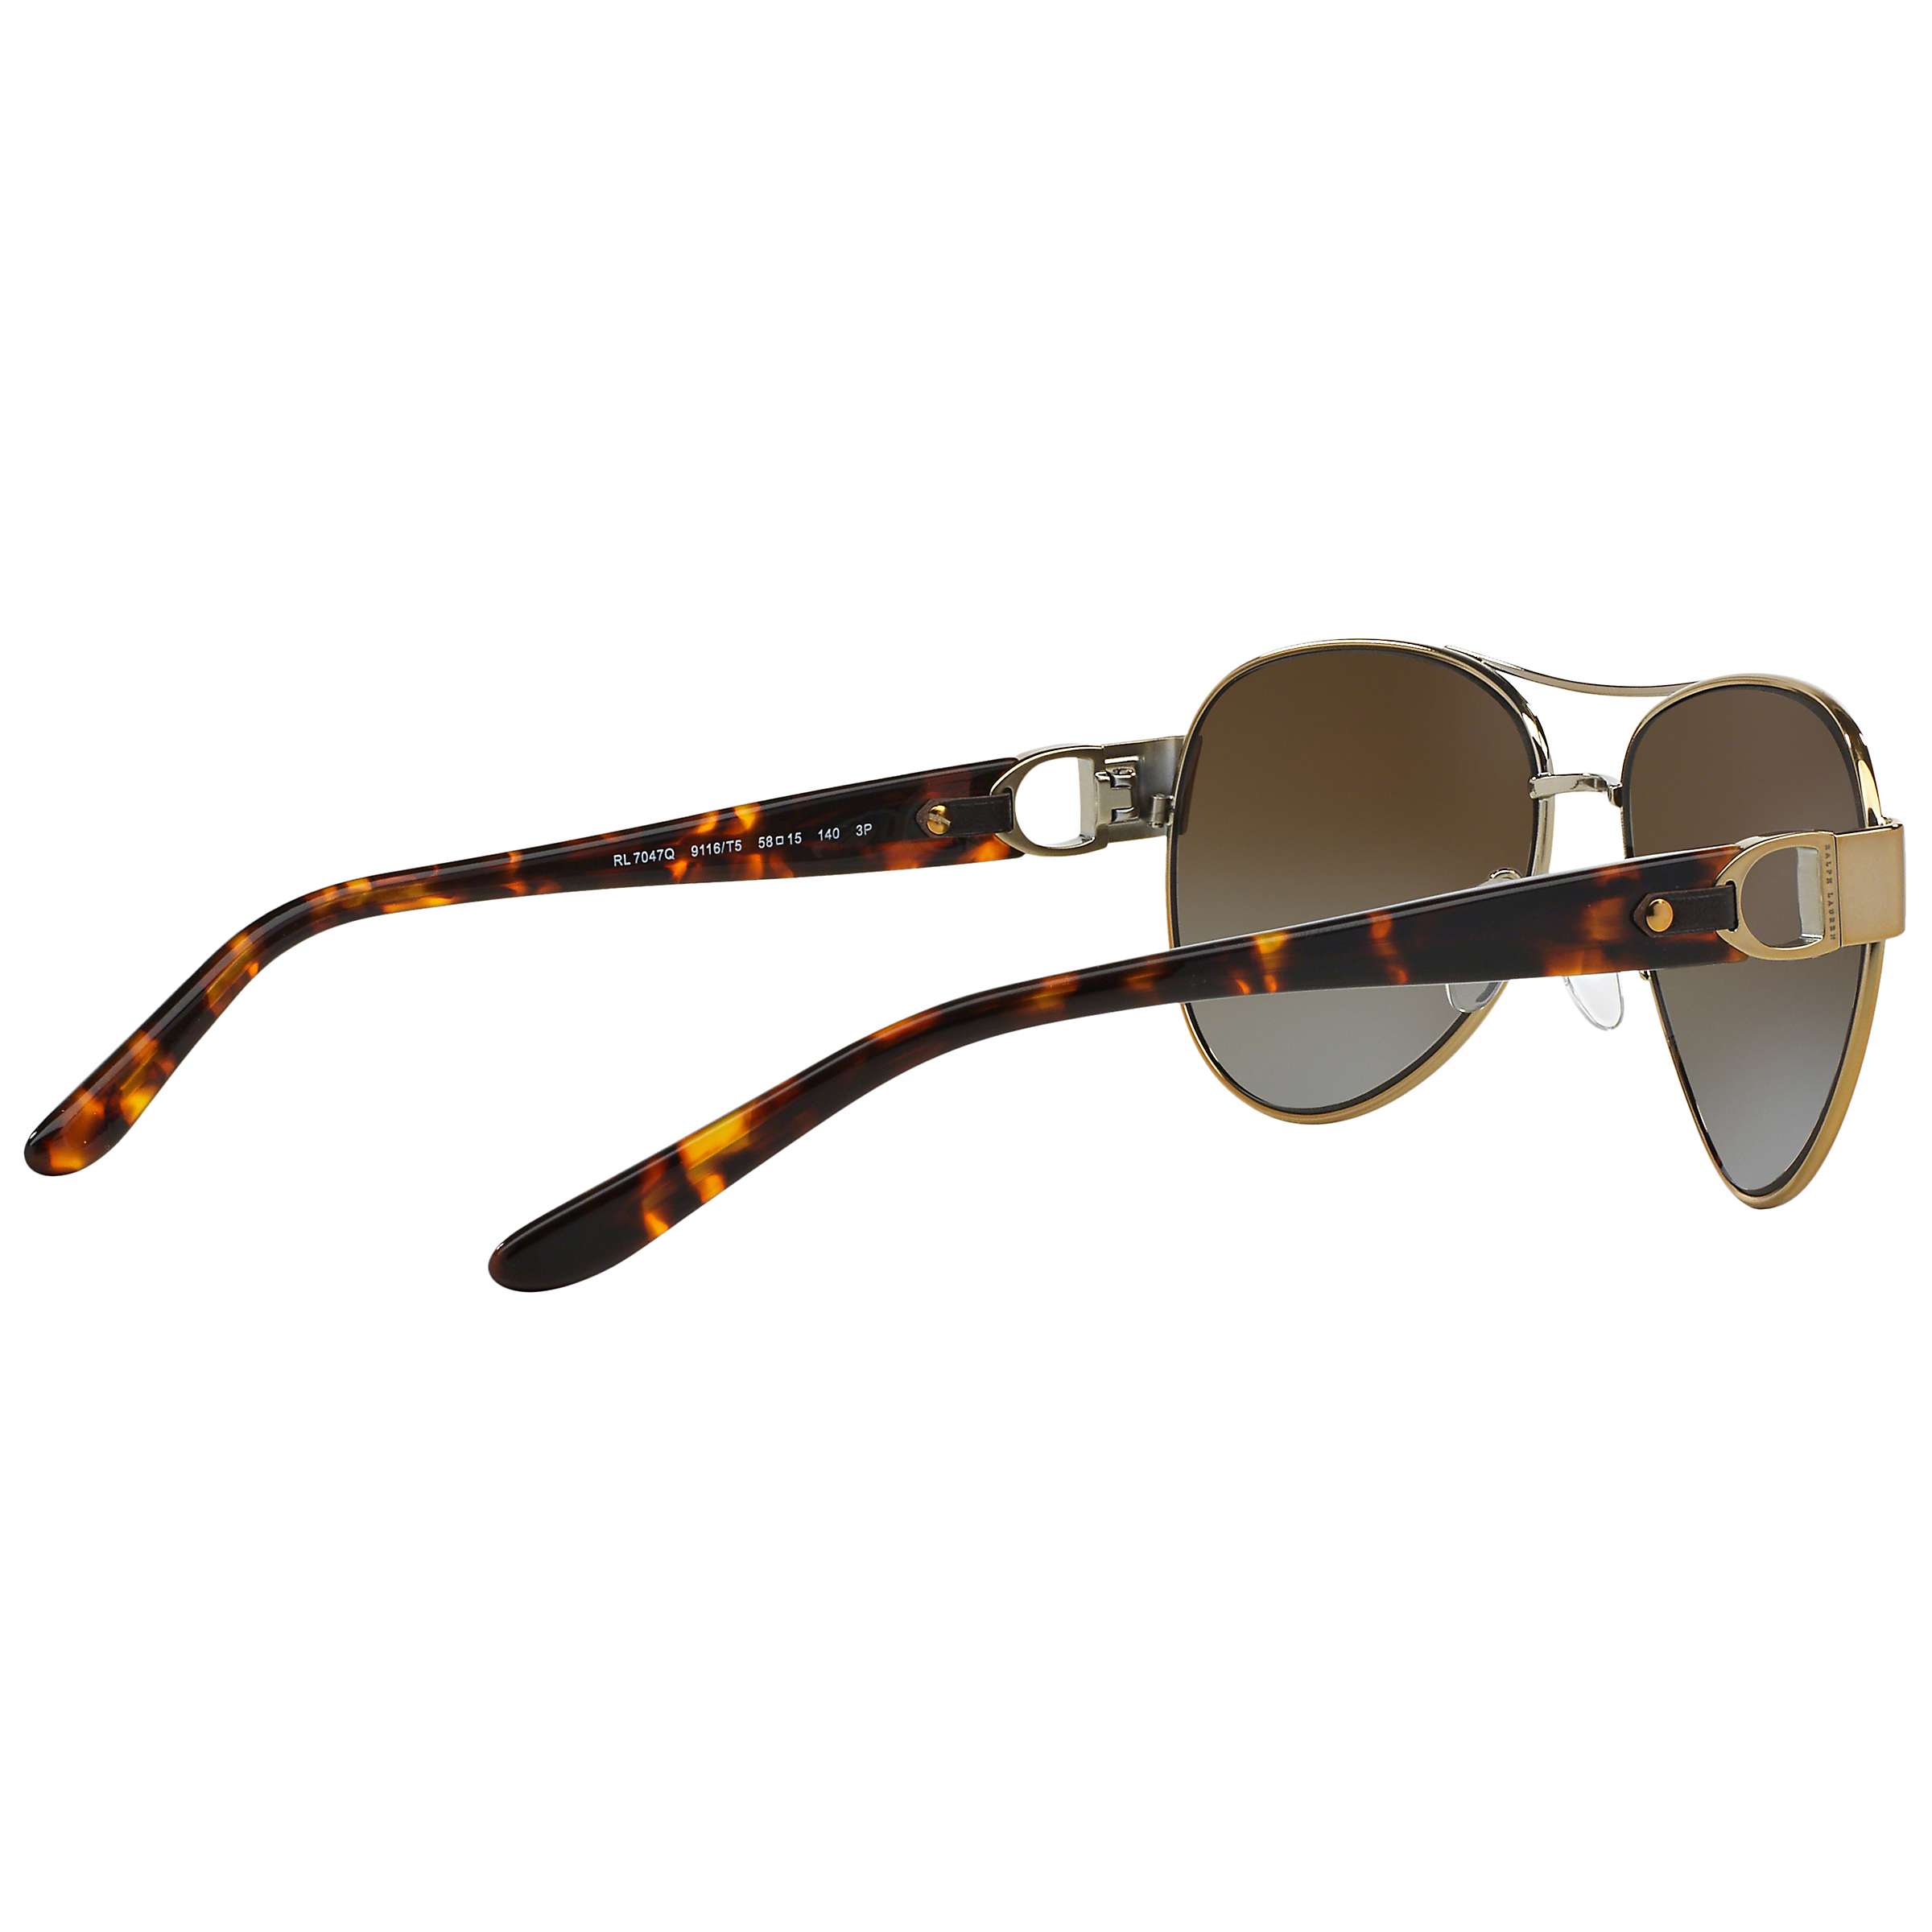 Buy Ralph Lauren RL7047Q Polarised Aviator Sunglasses, Gold Online at johnlewis.com